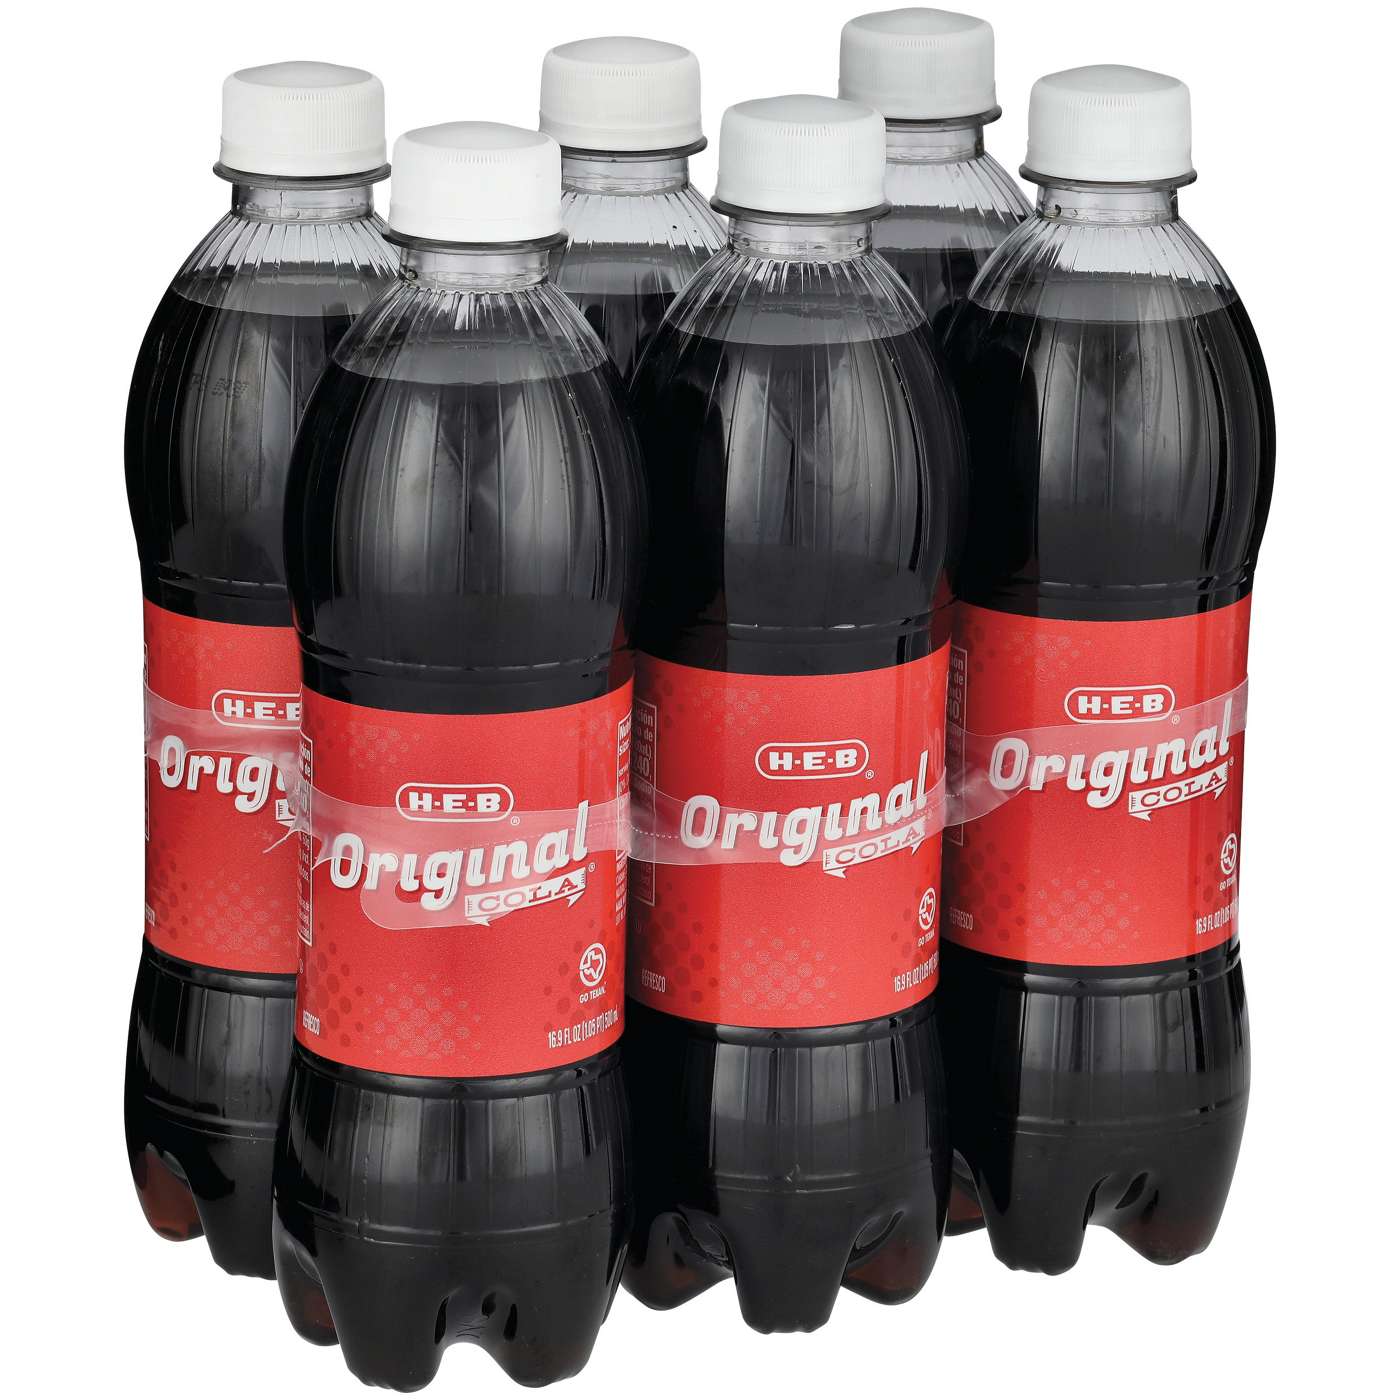 H-E-B Original Cola 6 pk Bottles; image 2 of 2